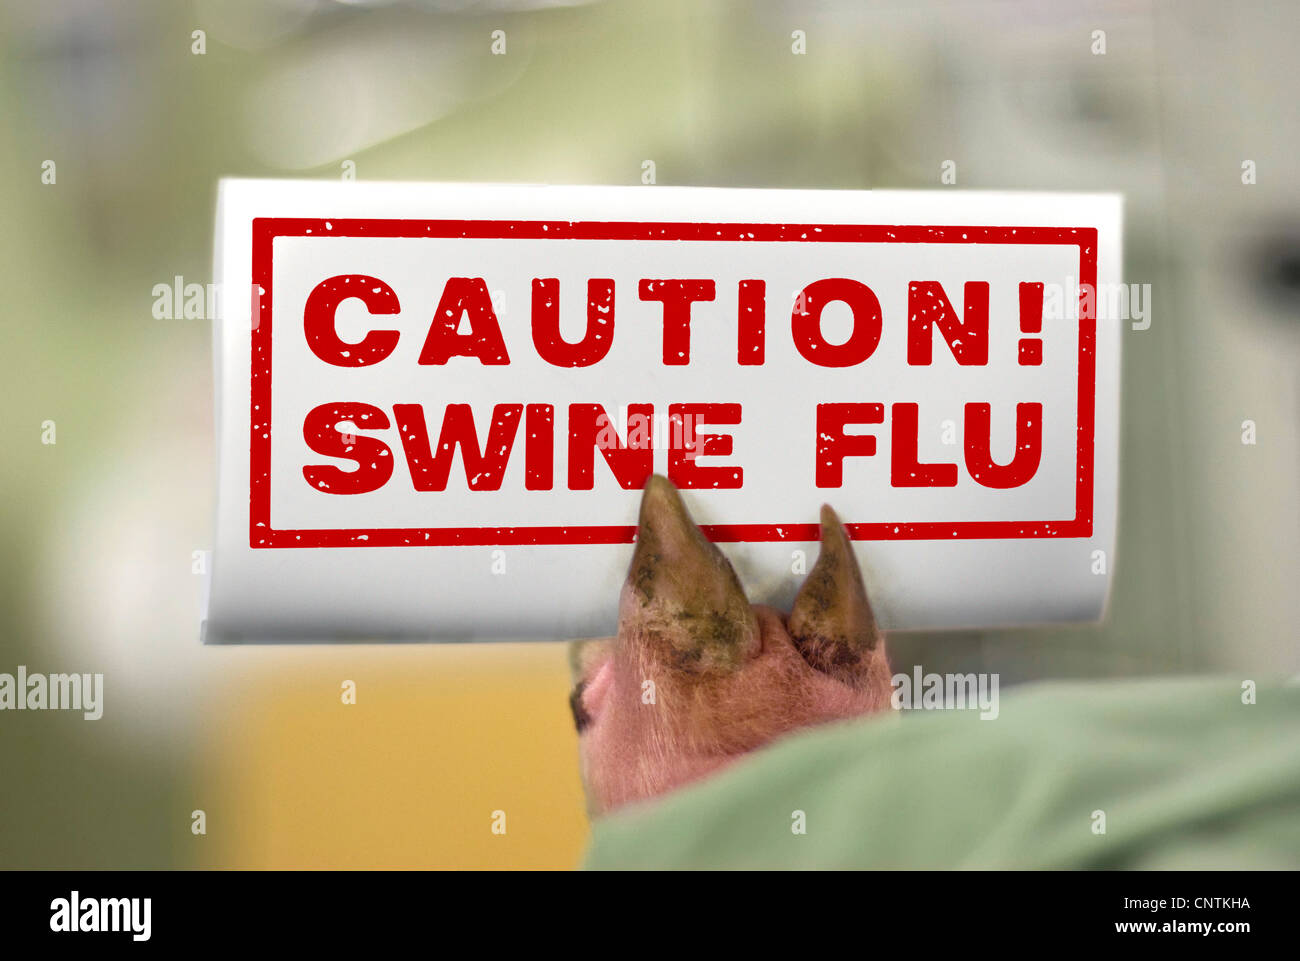 symbolic for swine influenza Stock Photo